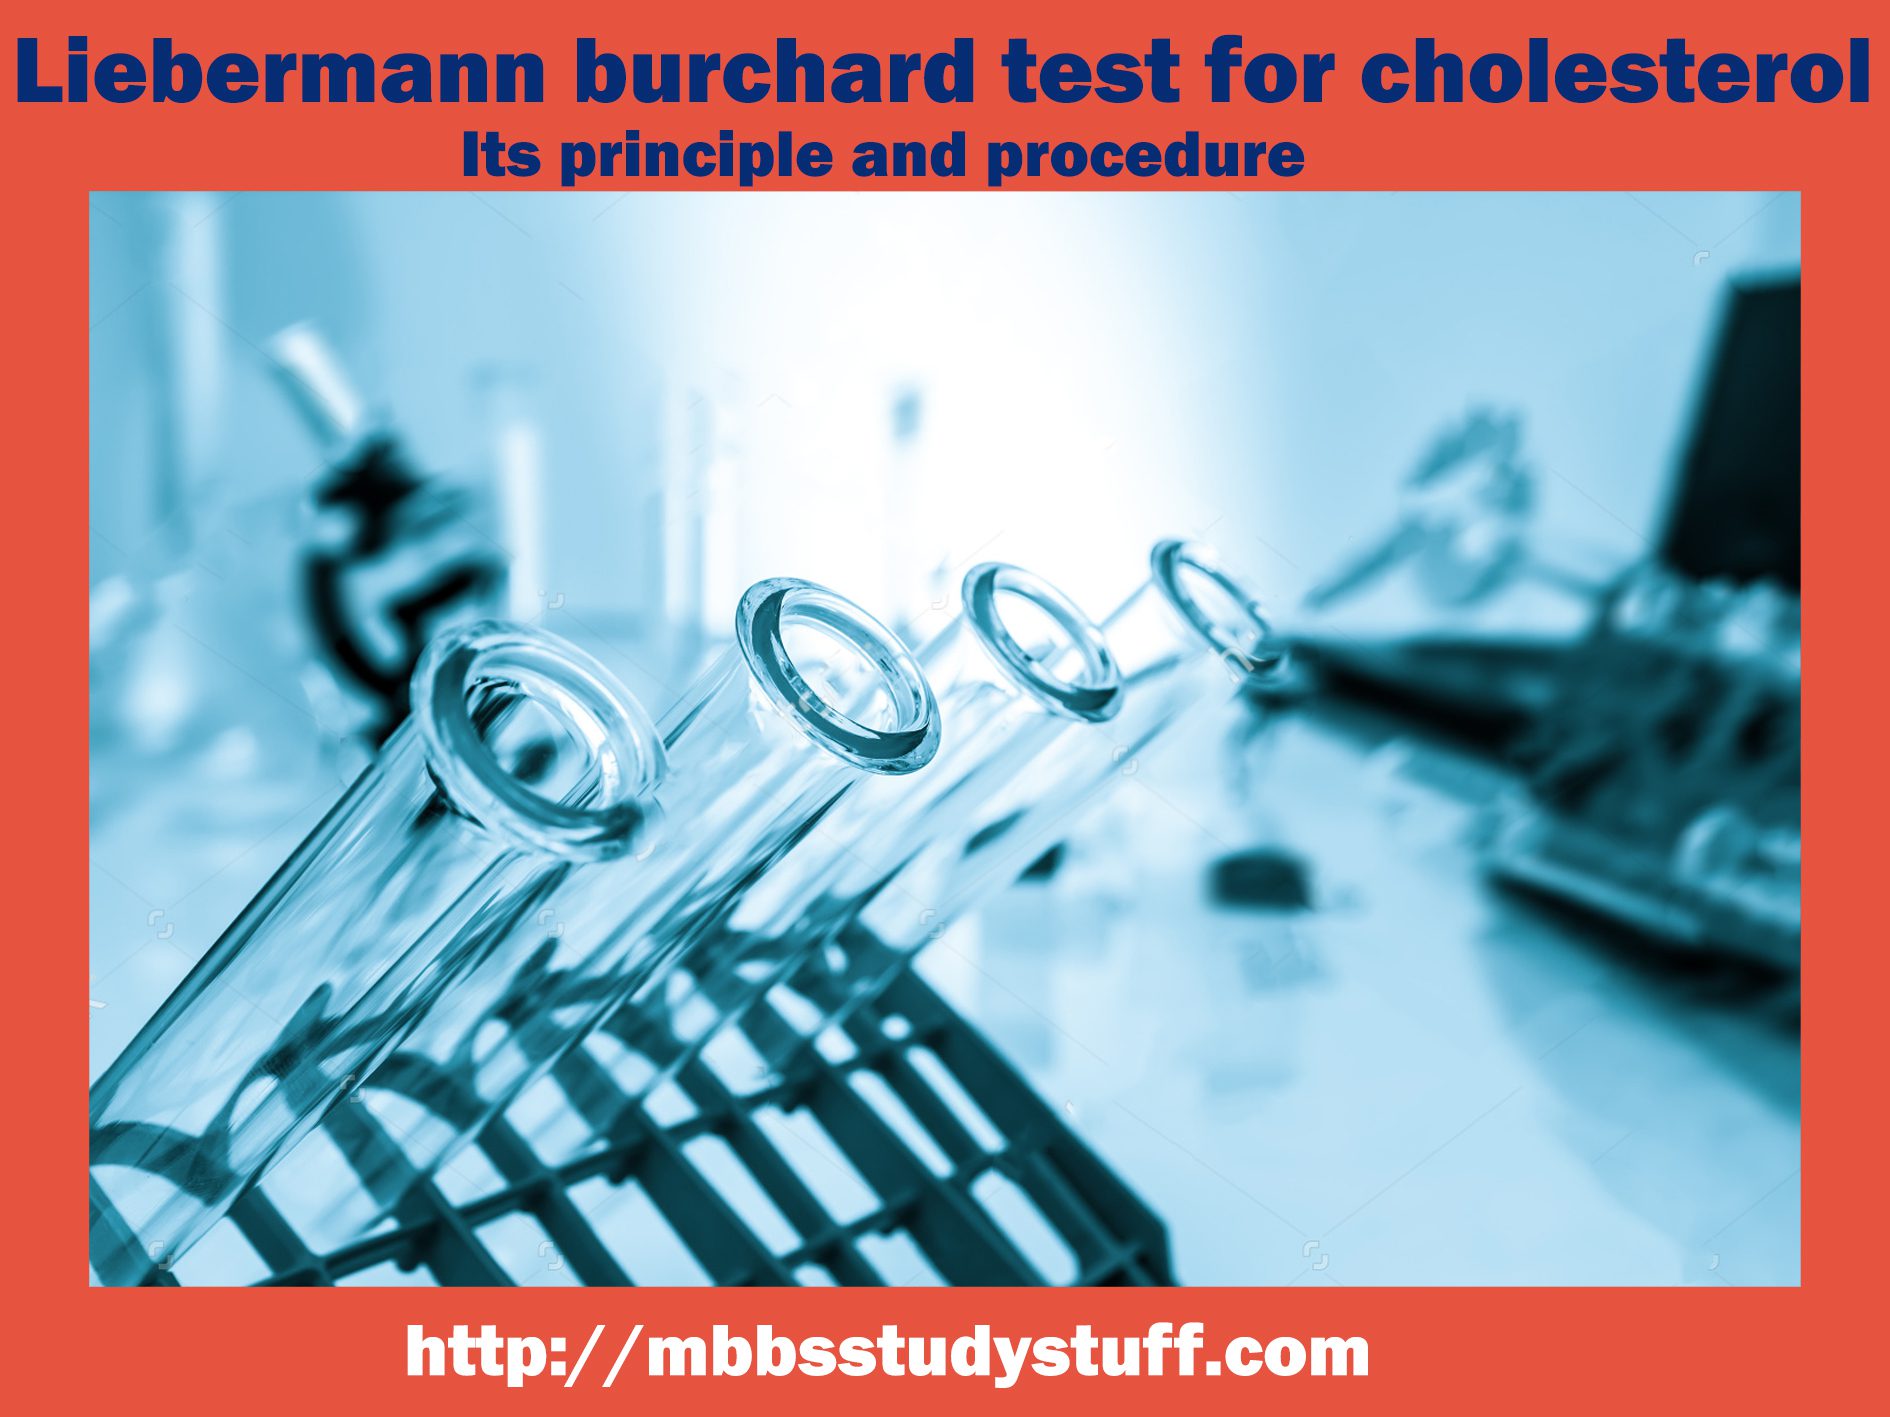 Liebermann burchard test for cholesterol - Its principle and procedure